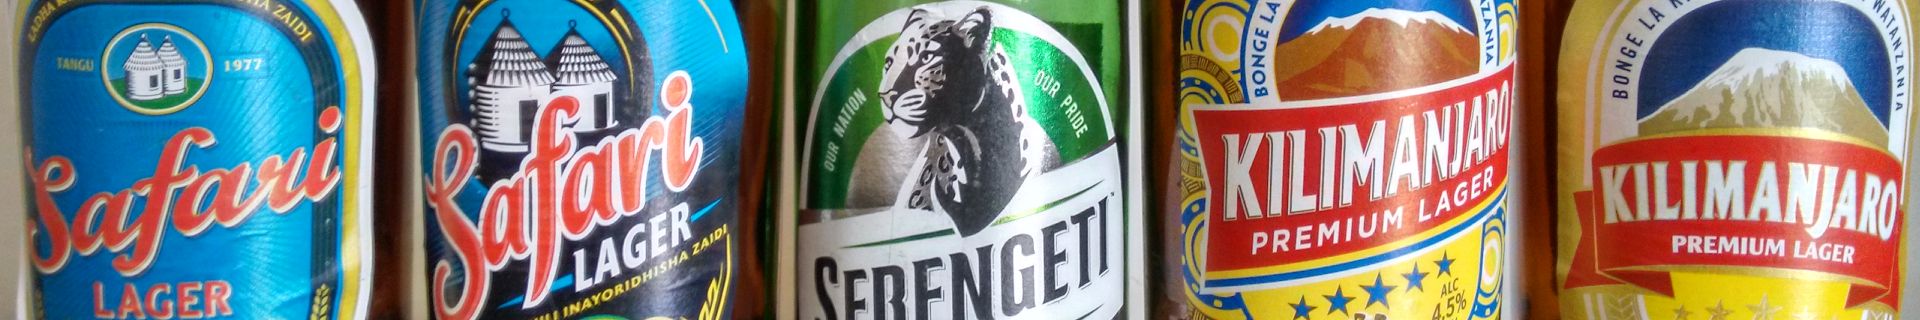 Tanzania Beers: Safari Lager, Serengeti Premium Lager, Kilimanjaro Premium Lager